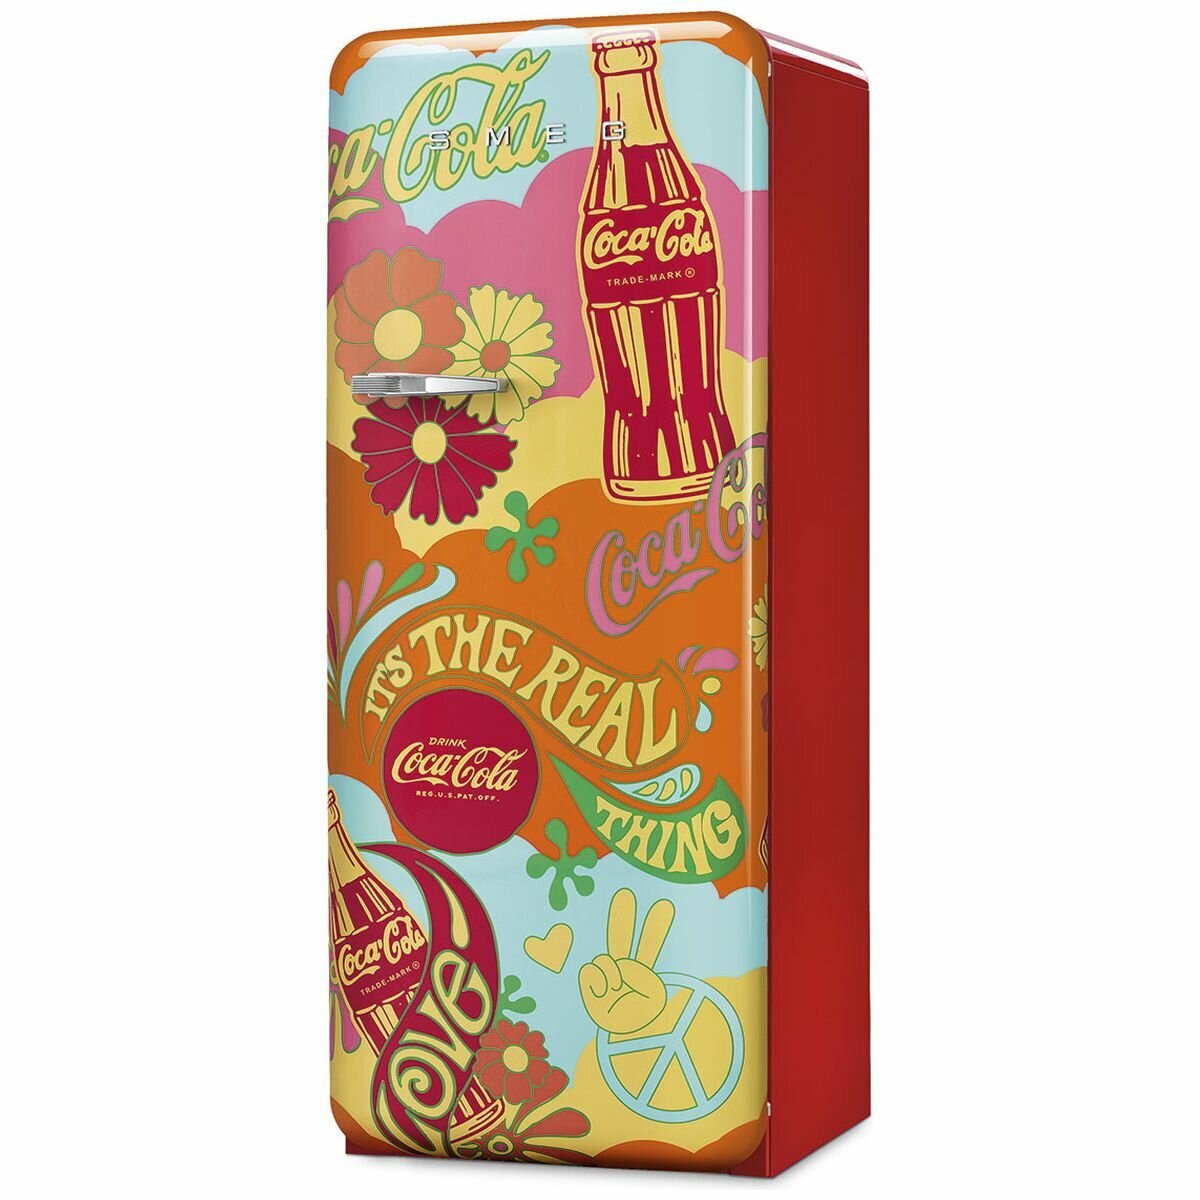 Limited edition Smeg 'Iconic' Coca Cola fridge - Appliance Retailer